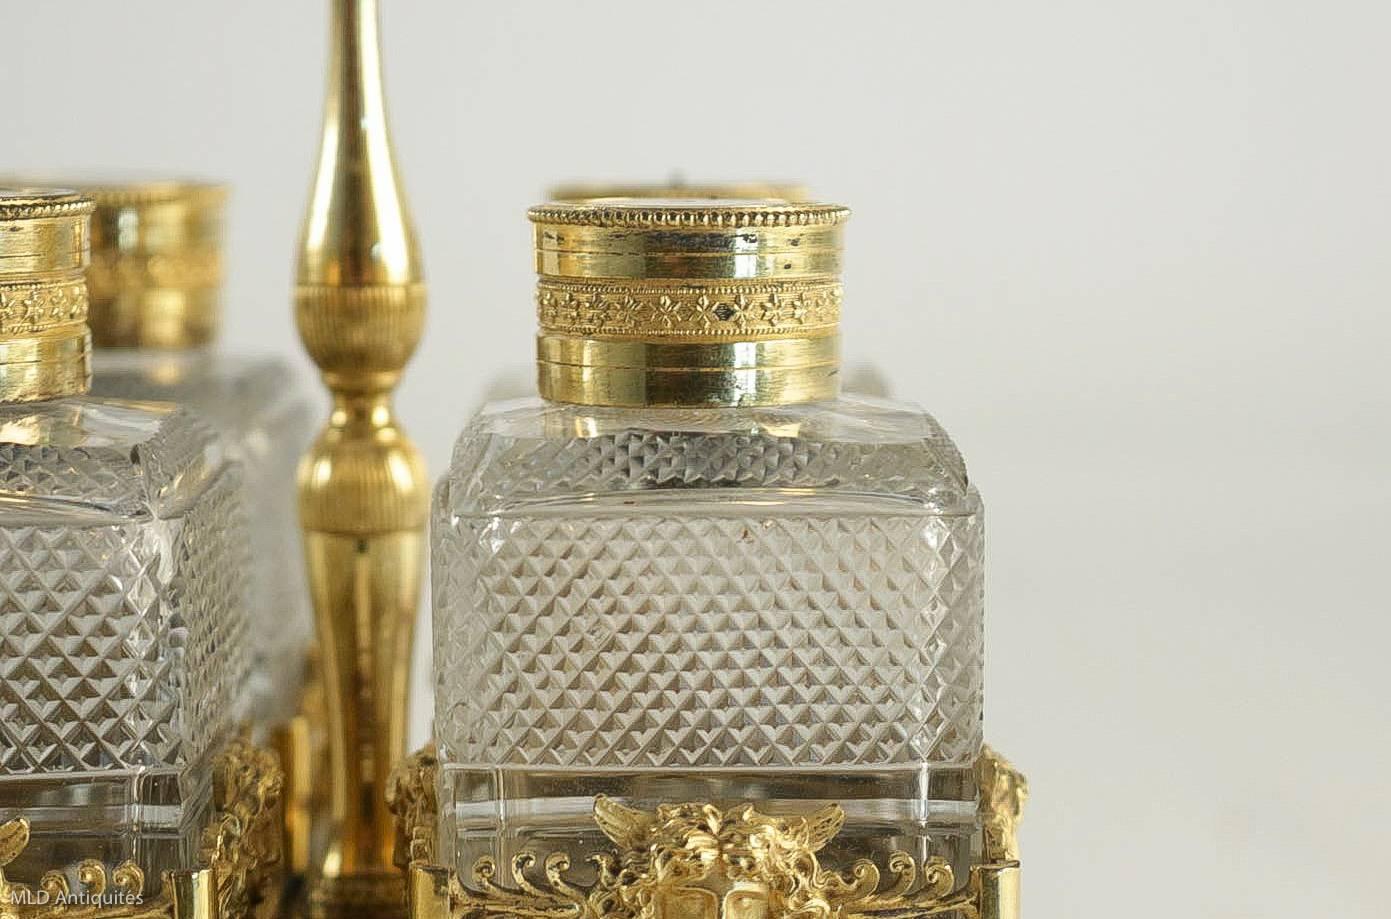 Crystal French Empire Period Fragrances Necessary Attributed to Ravrio, circa 1805-1810